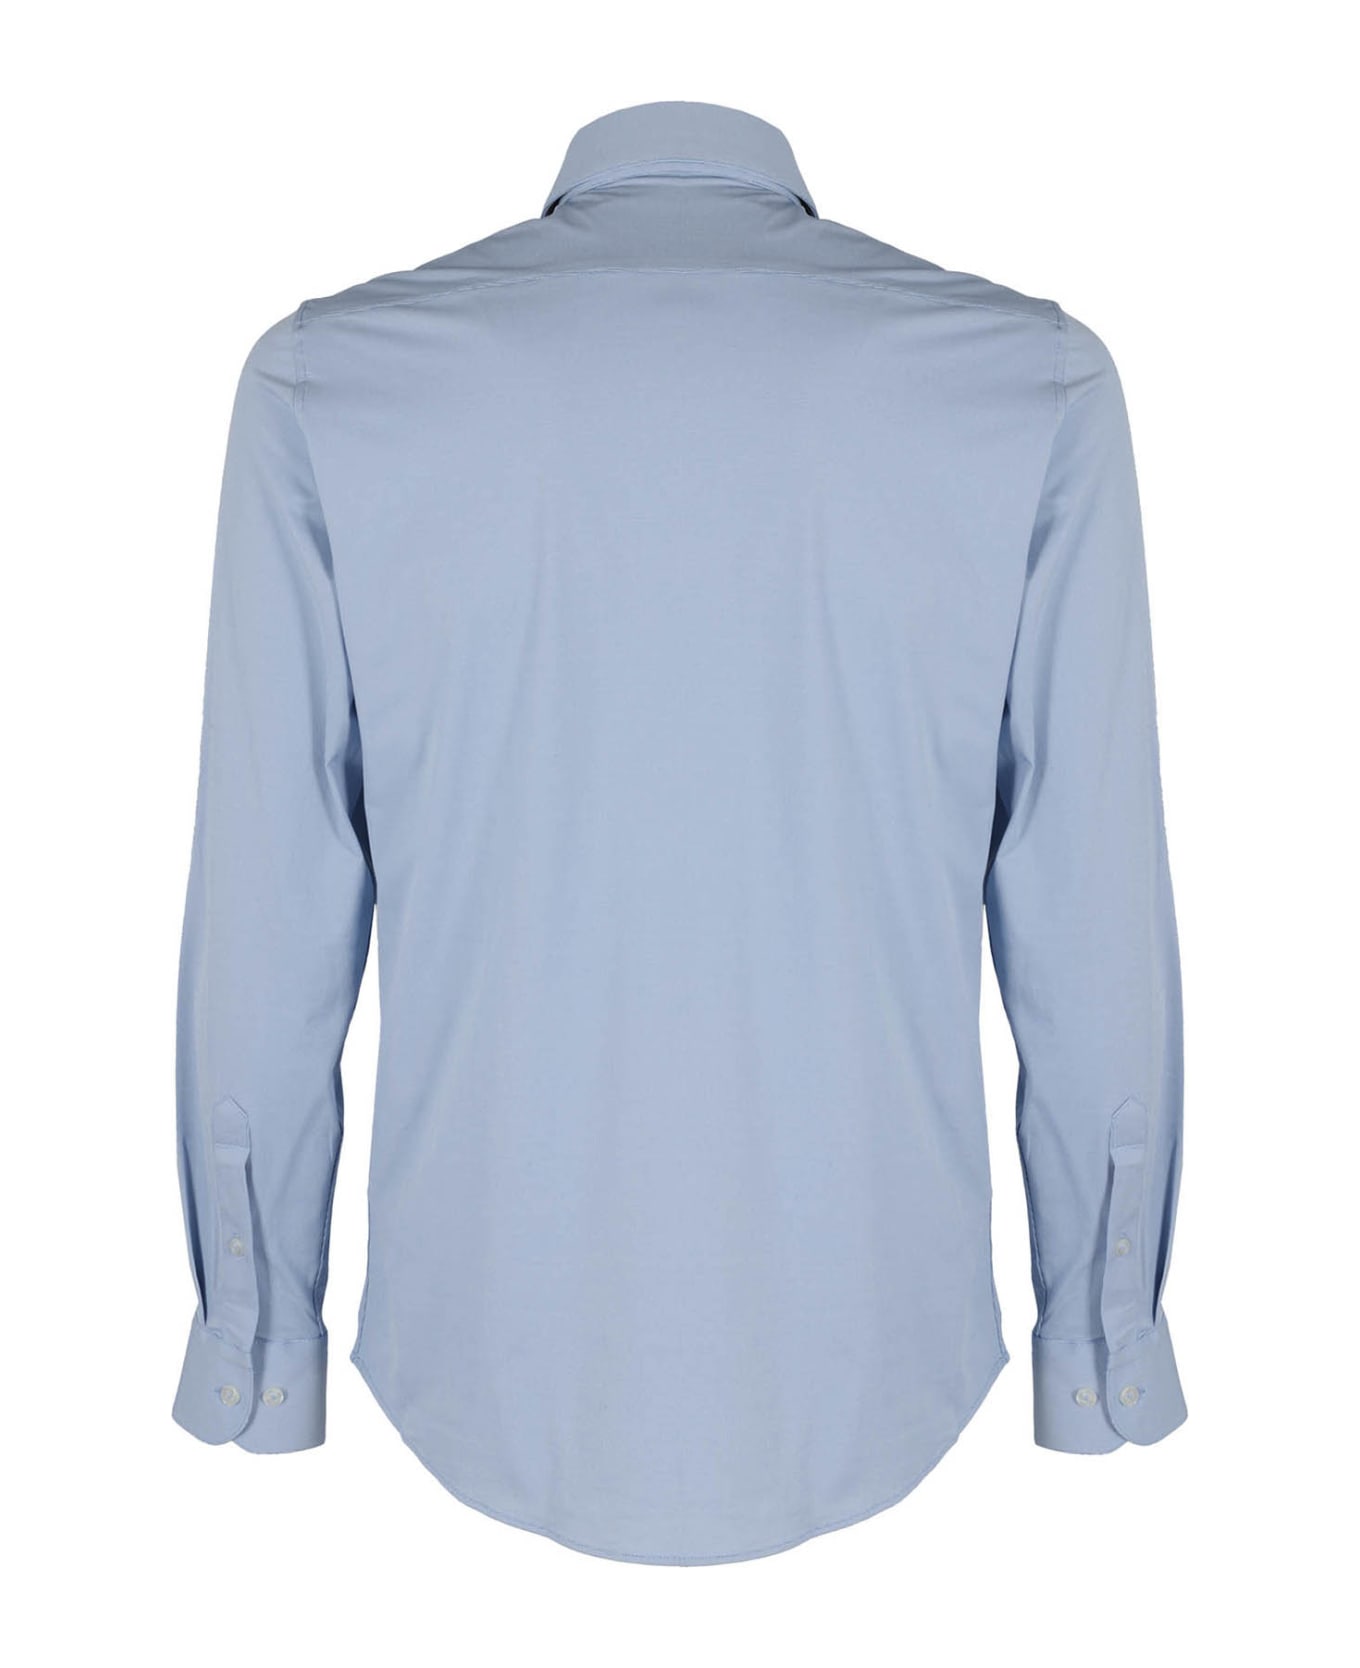 RRD - Roberto Ricci Design Oxford Jacquard Shirt